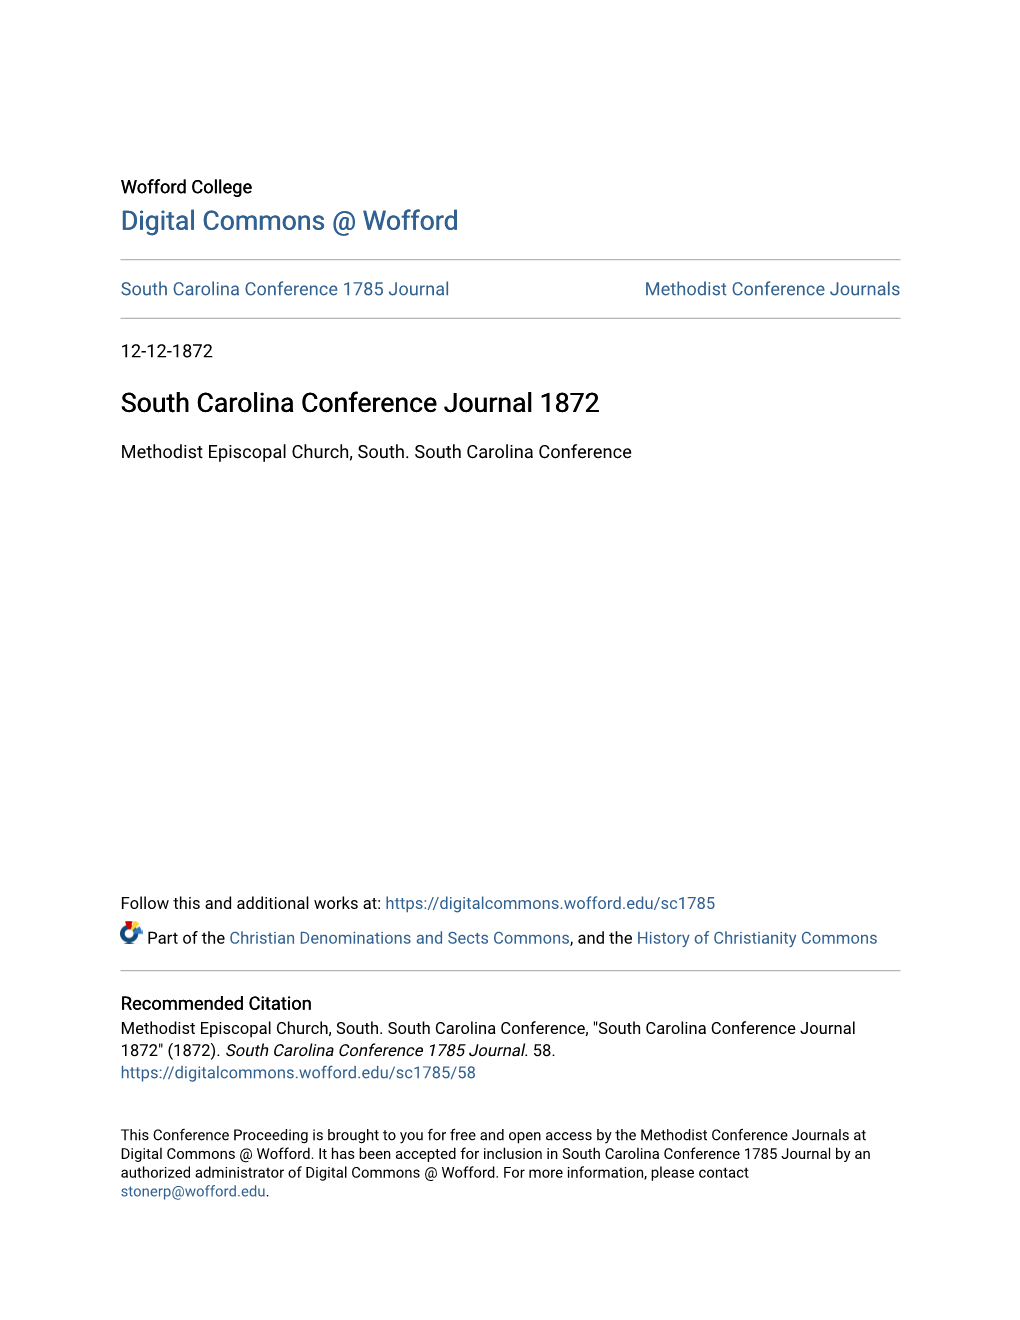 South Carolina Conference Journal 1872